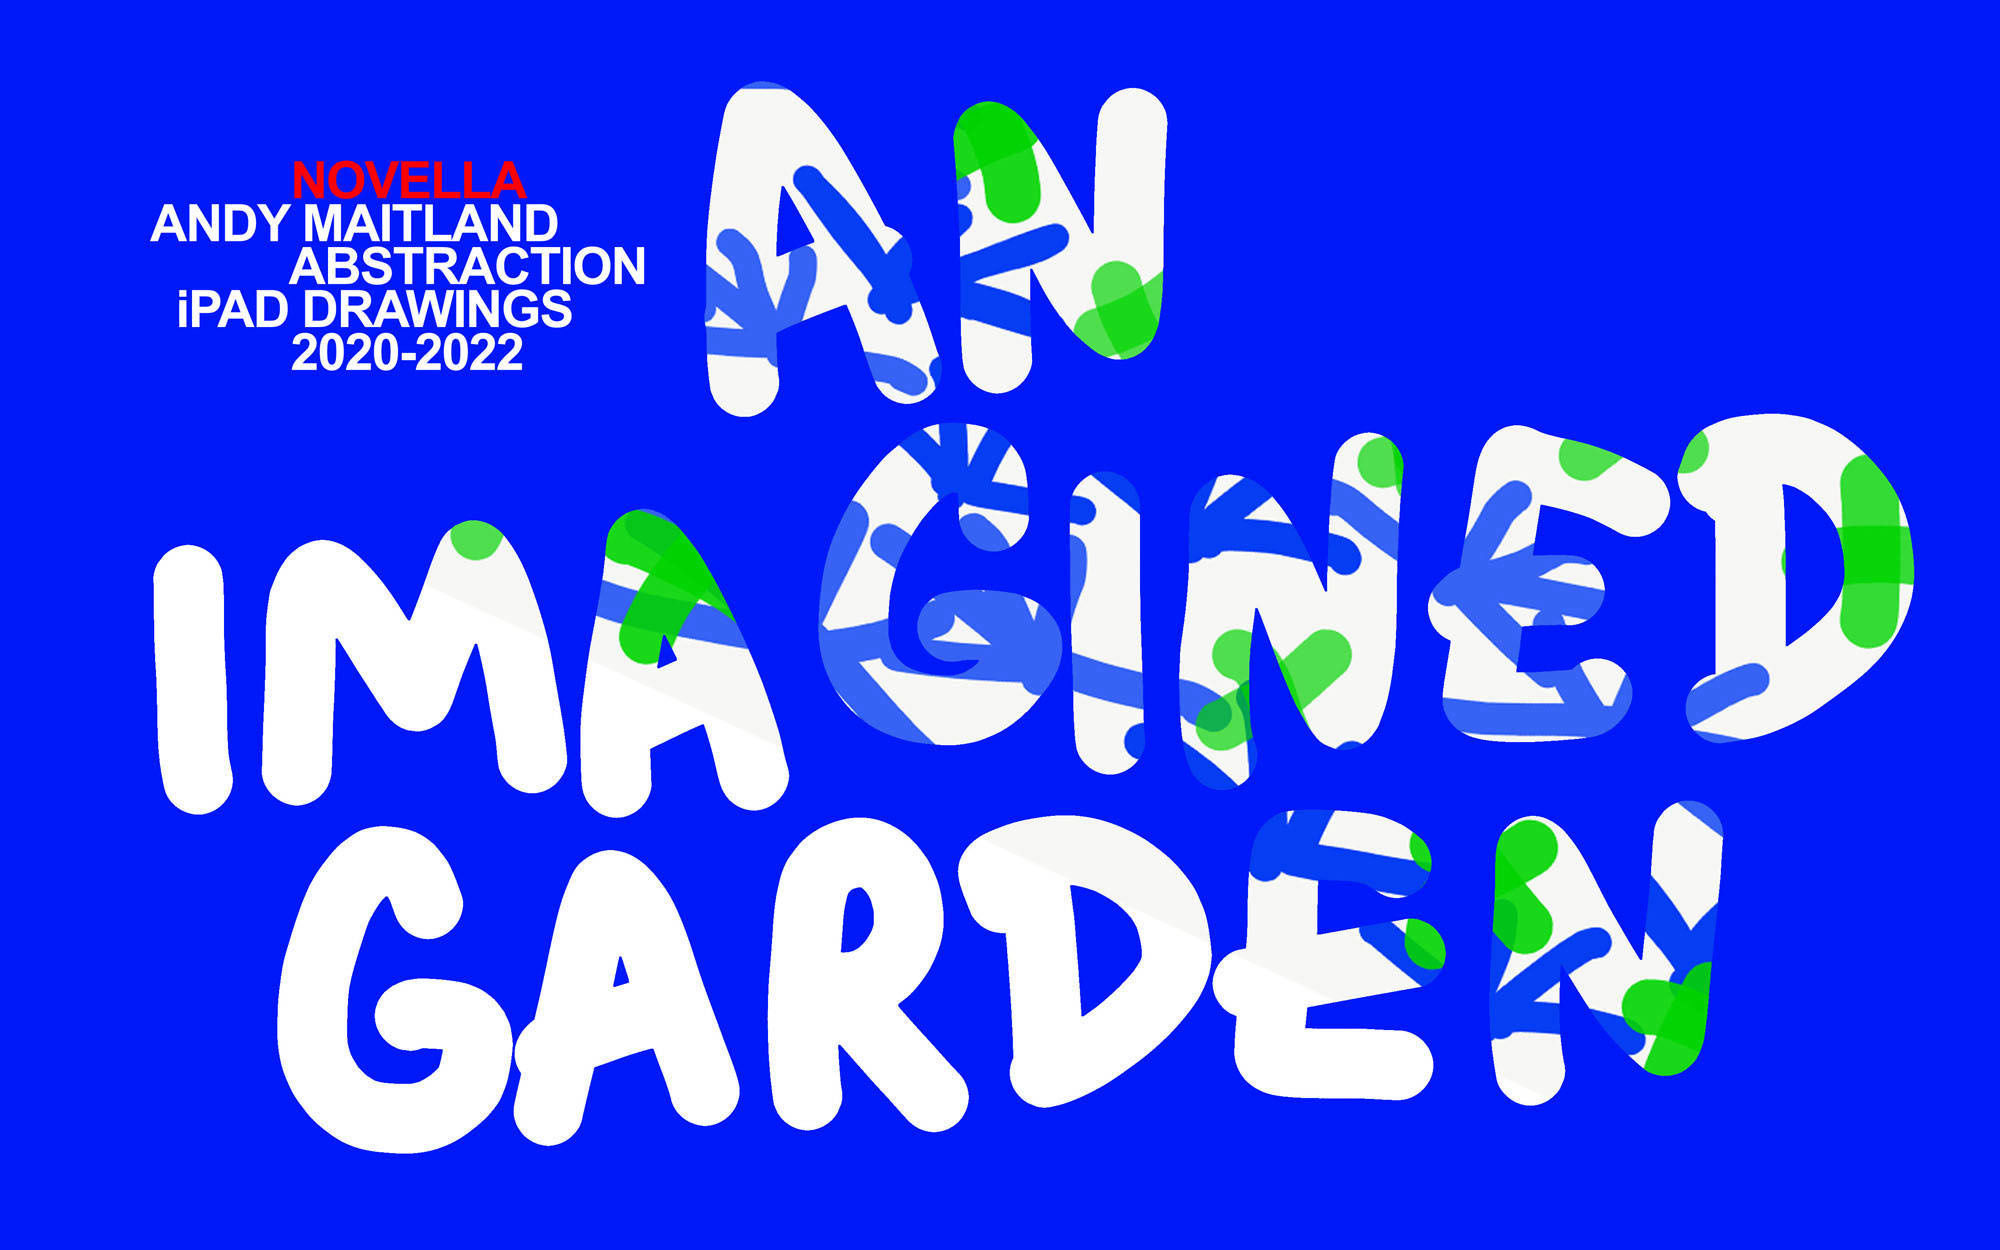 Andy Maitland, iPad artist, 'An Imagined Garden, abstraction iPad drawings 2020-2022 Novella'